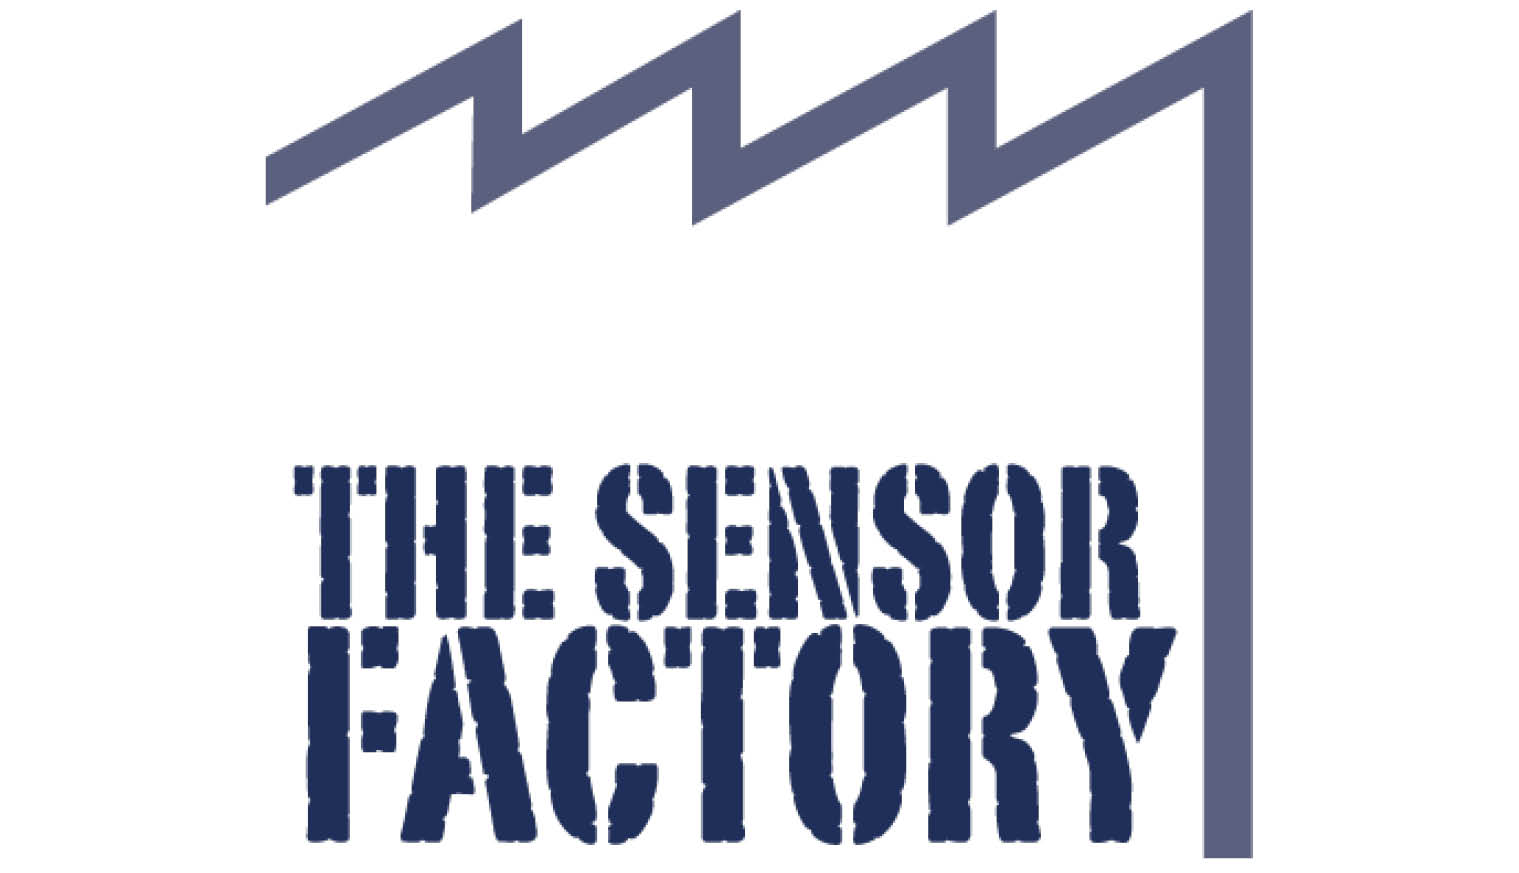 The Sensor Factory